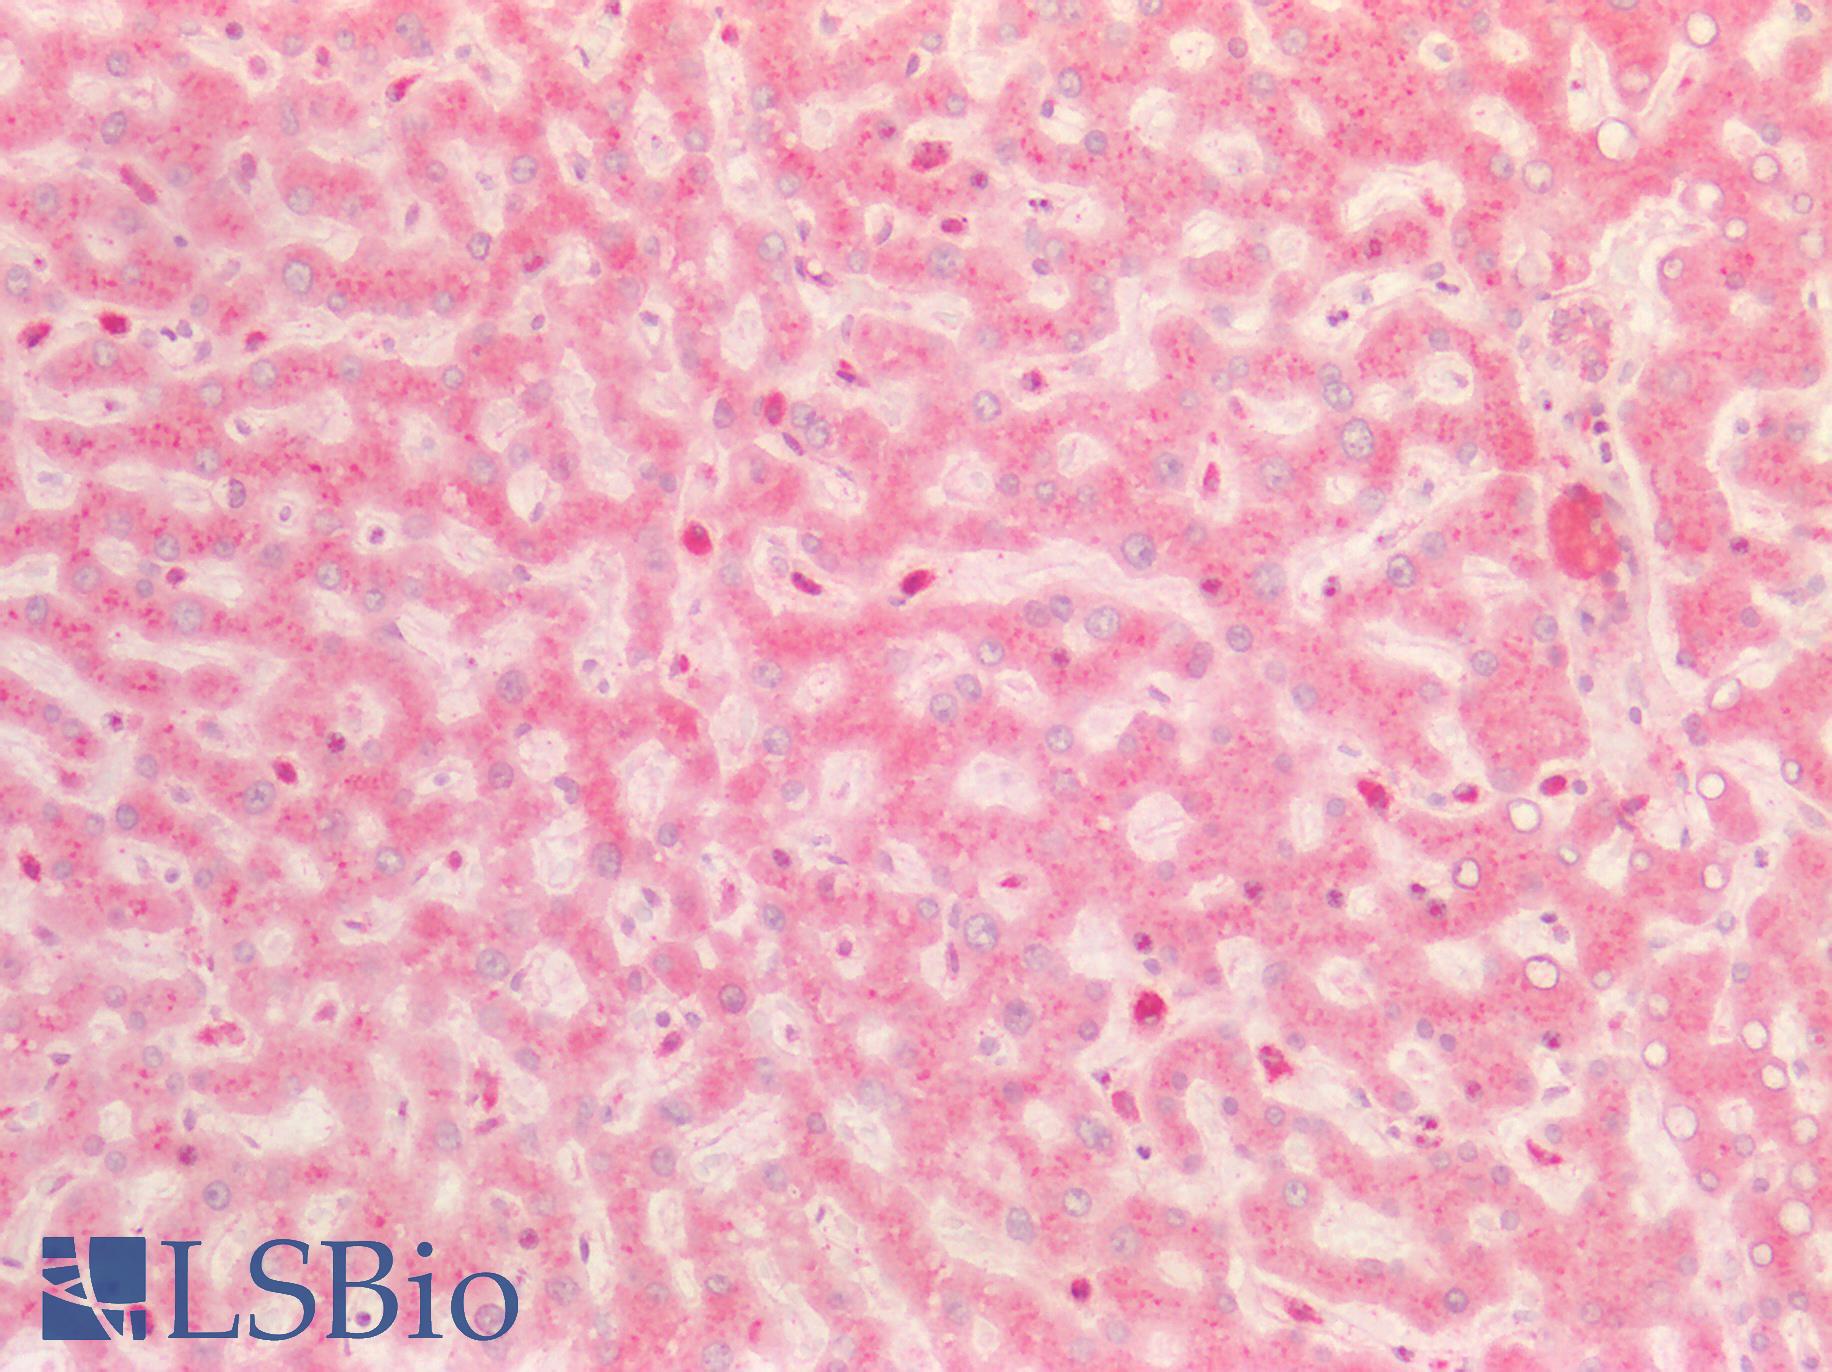 BMP8B Antibody - Human Liver: Formalin-Fixed, Paraffin-Embedded (FFPE)